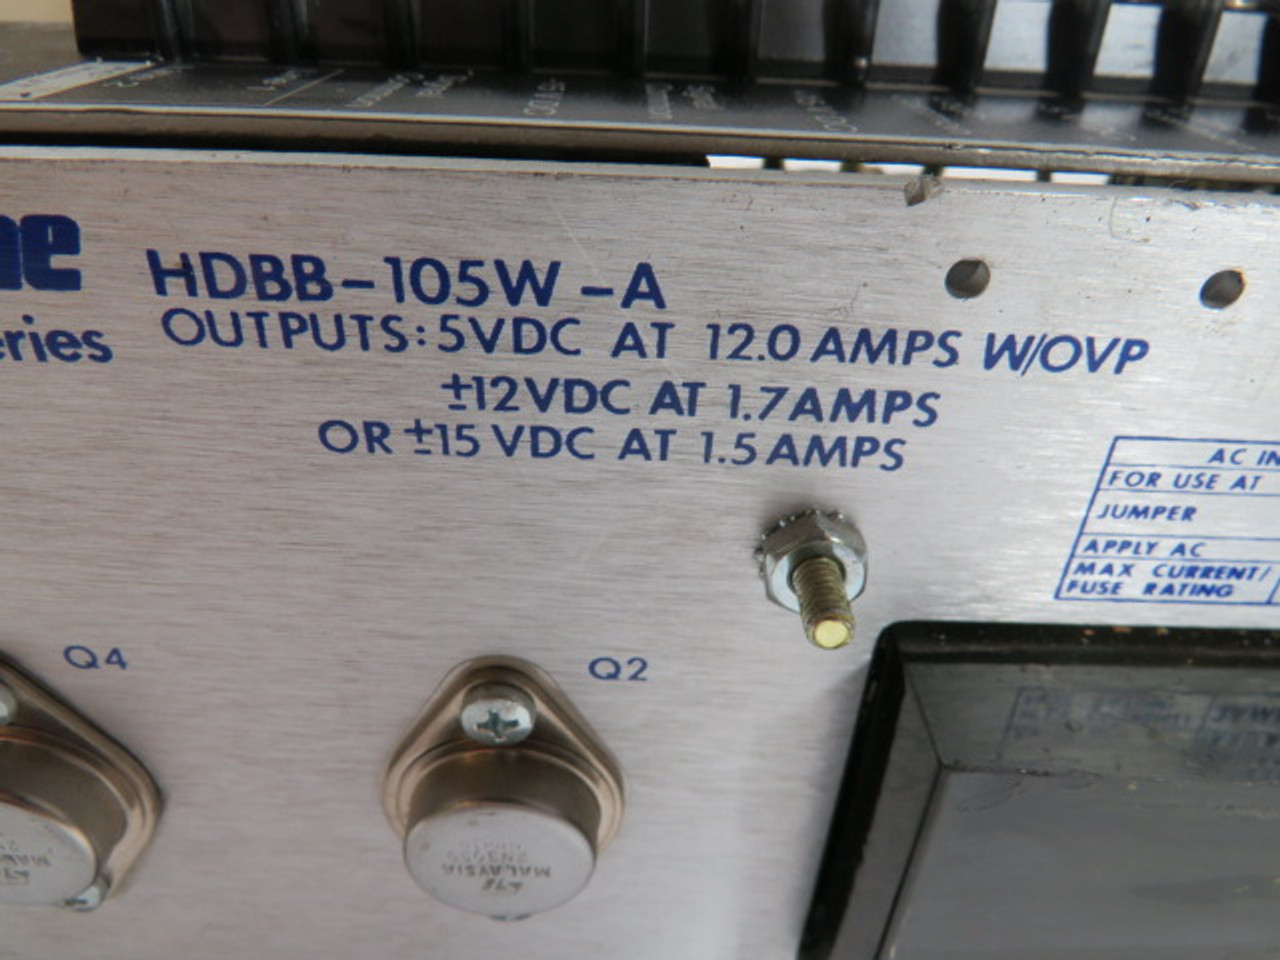 PowerOne HDBB-105W-A Power Supply Output: 5VDC@12A 12VDC@1.2 15VDC@1.5A USED